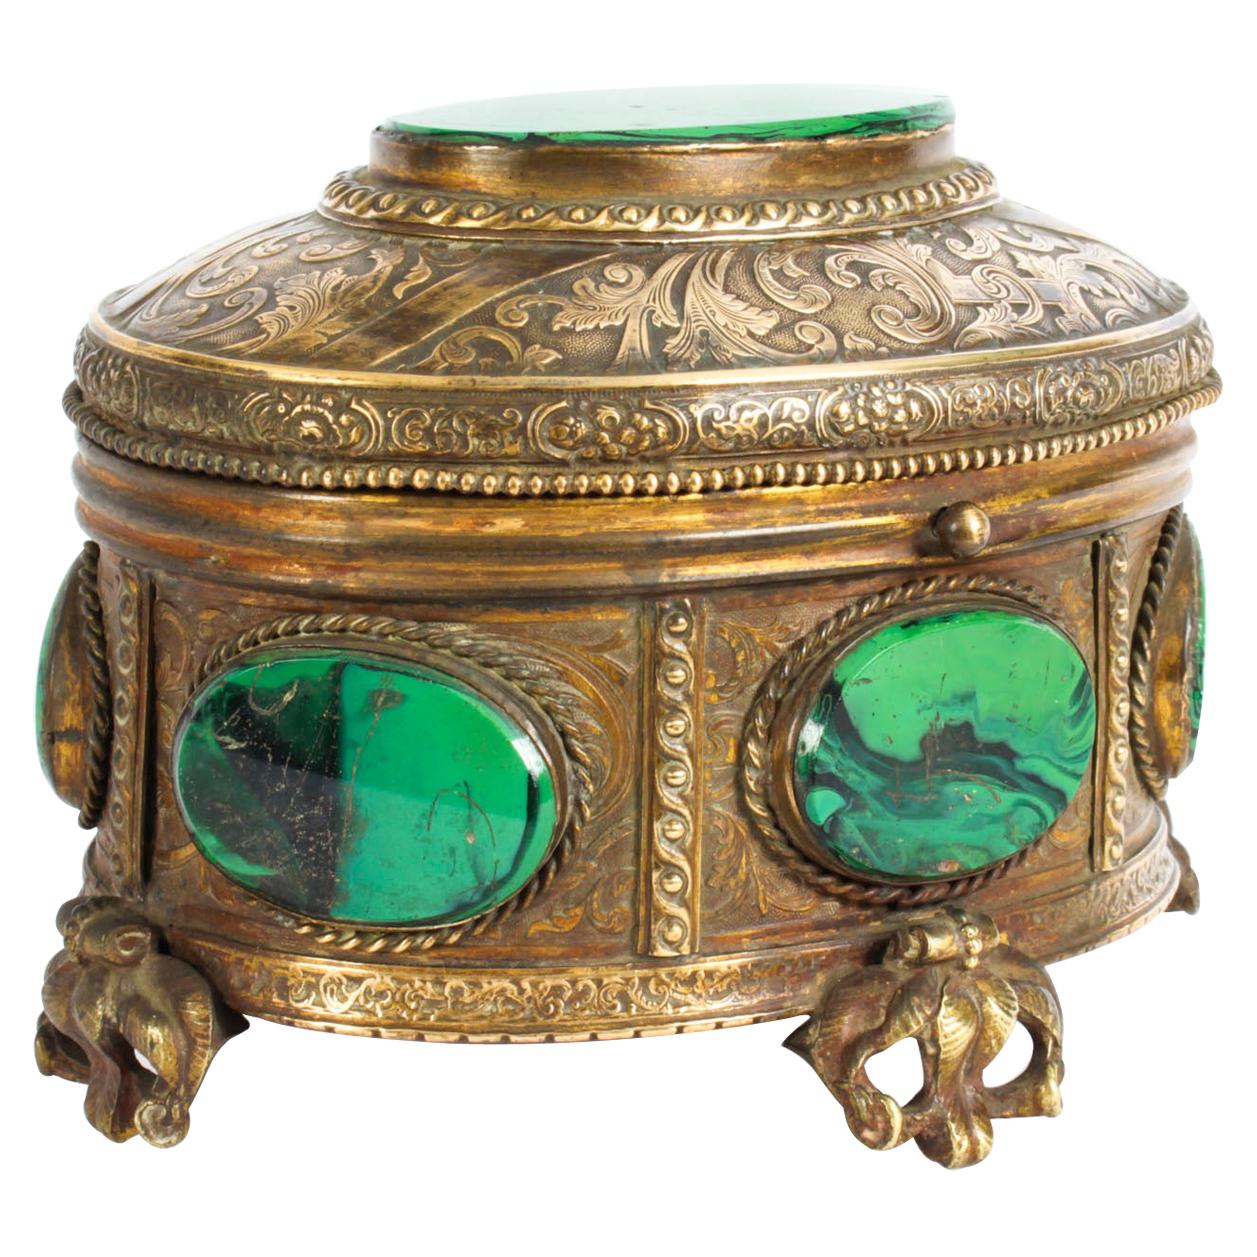 Antique Malachite and Gilt Bronze Lidded Jewelry Casket, 19th Century